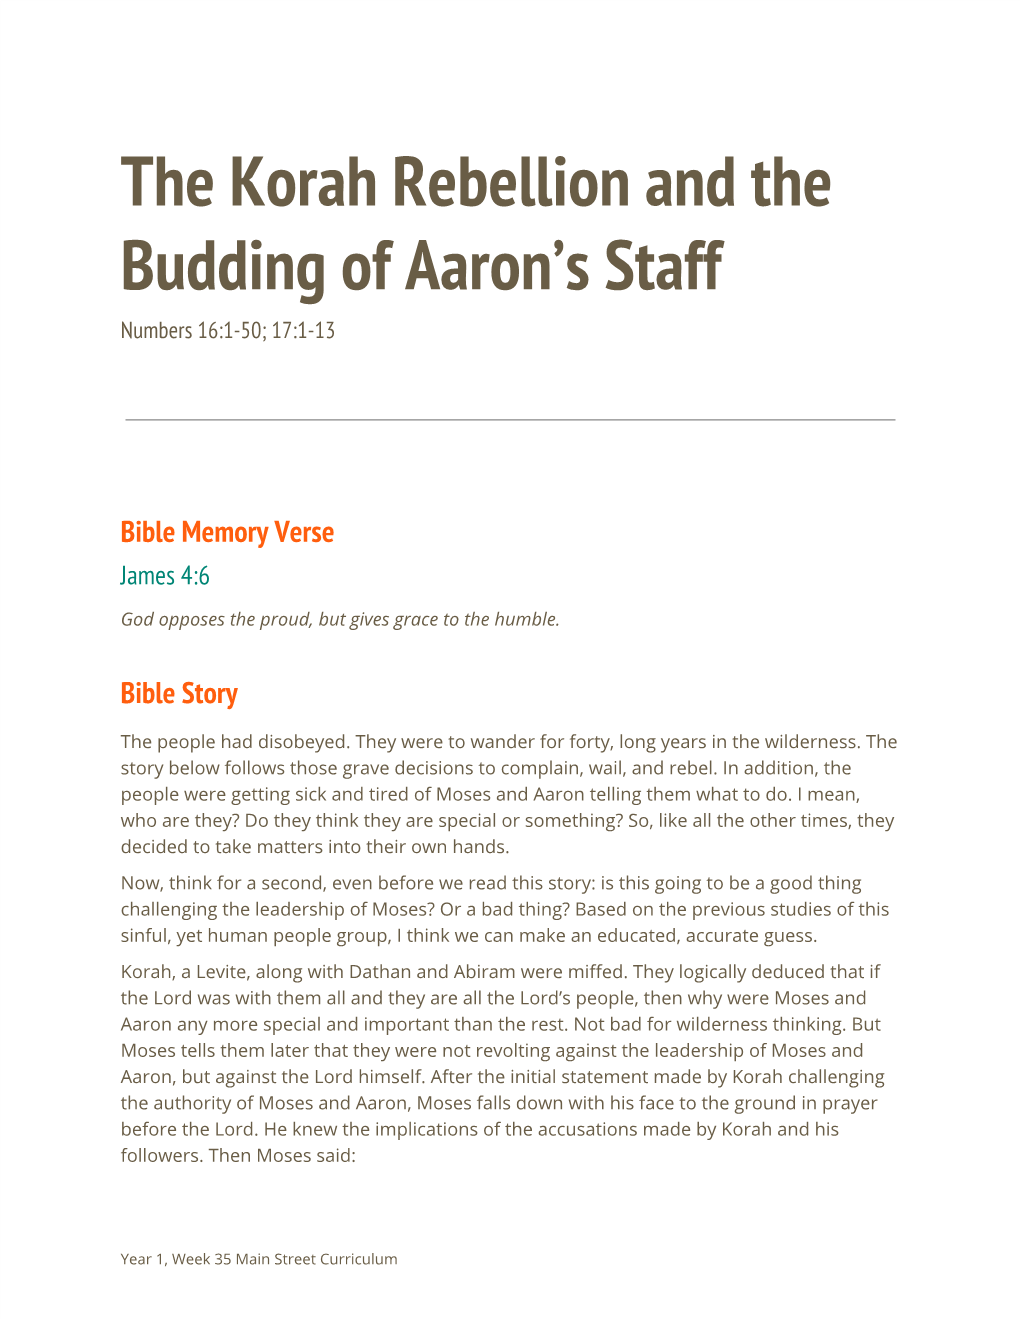 The Korah Rebellion and the Budding of Aaron's Staff